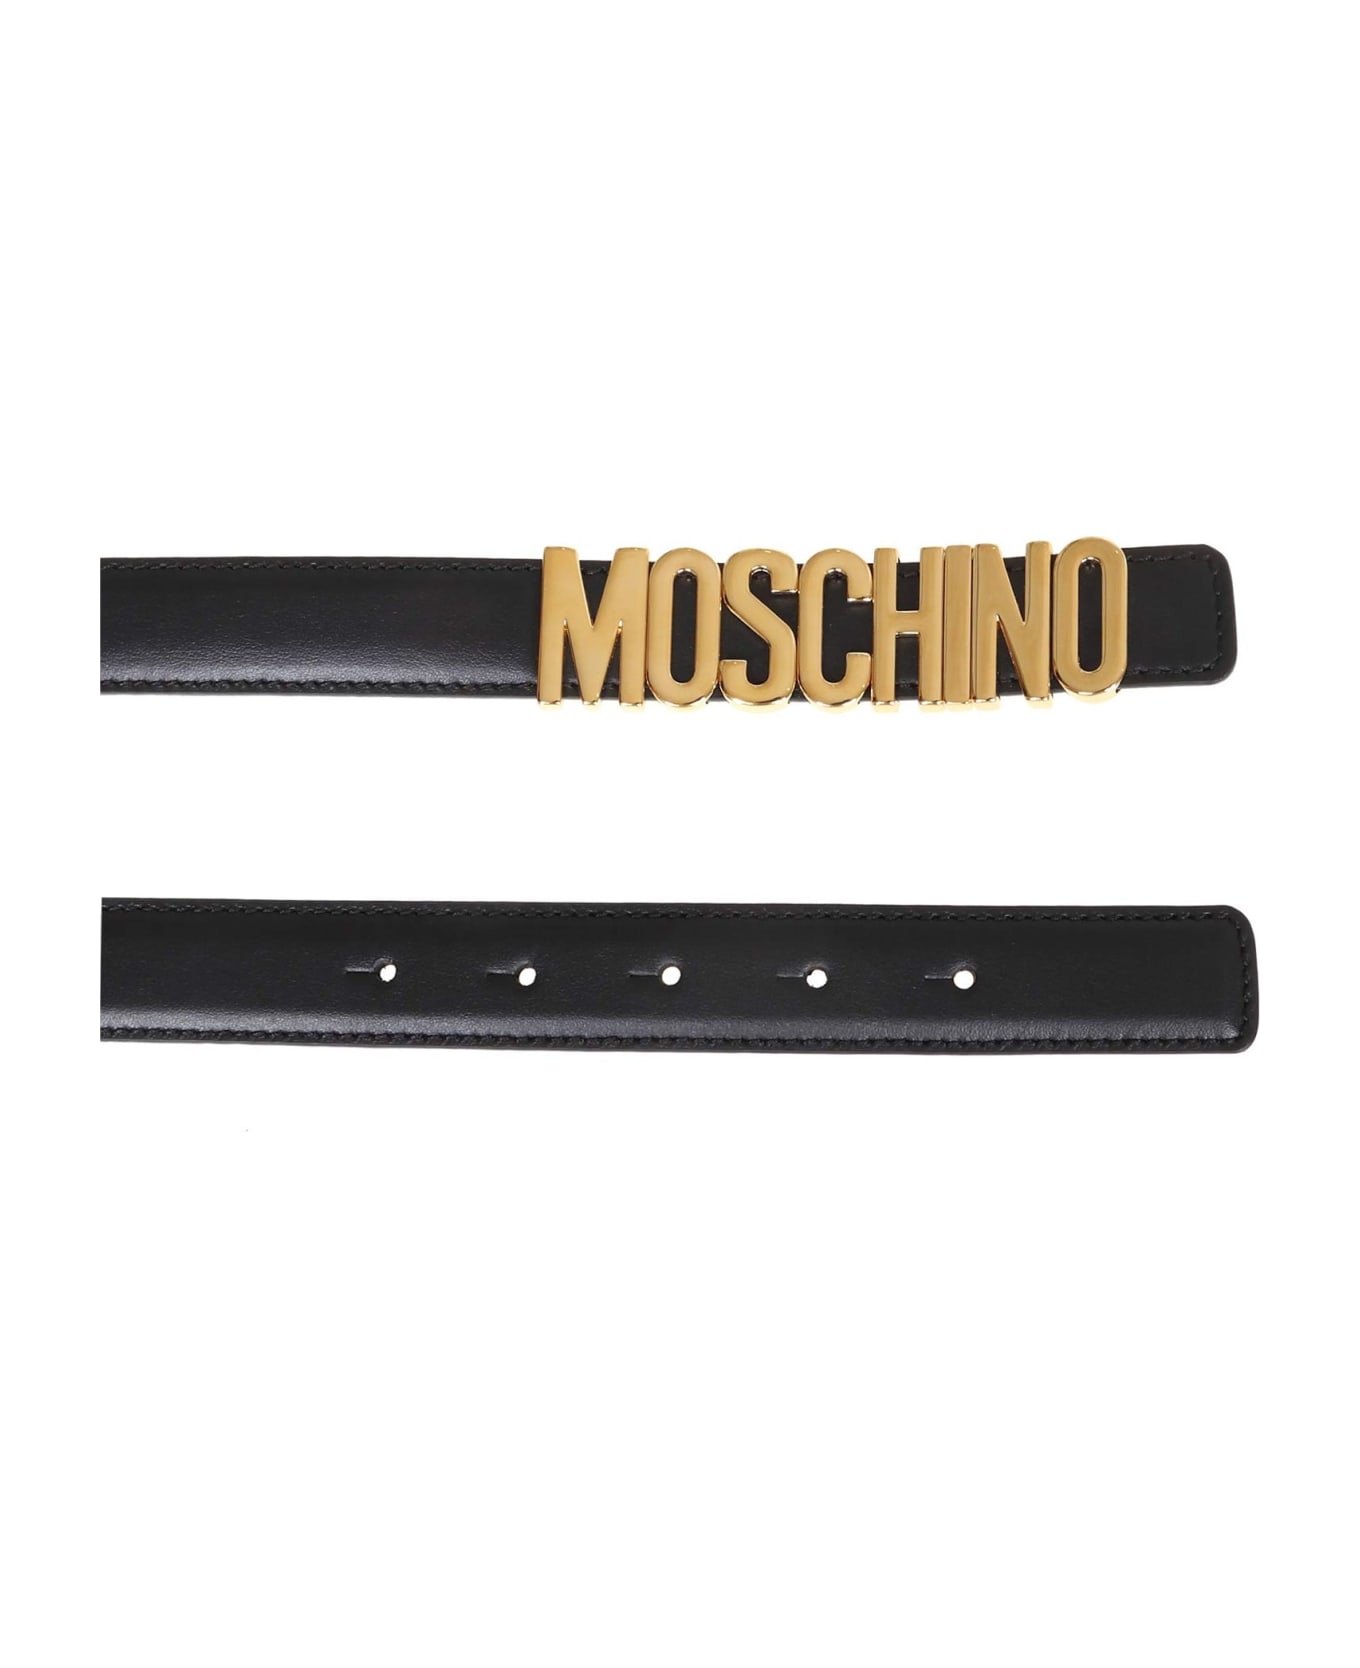 Moschino Leather Belt Lettering Color Black - BLACK ベルト